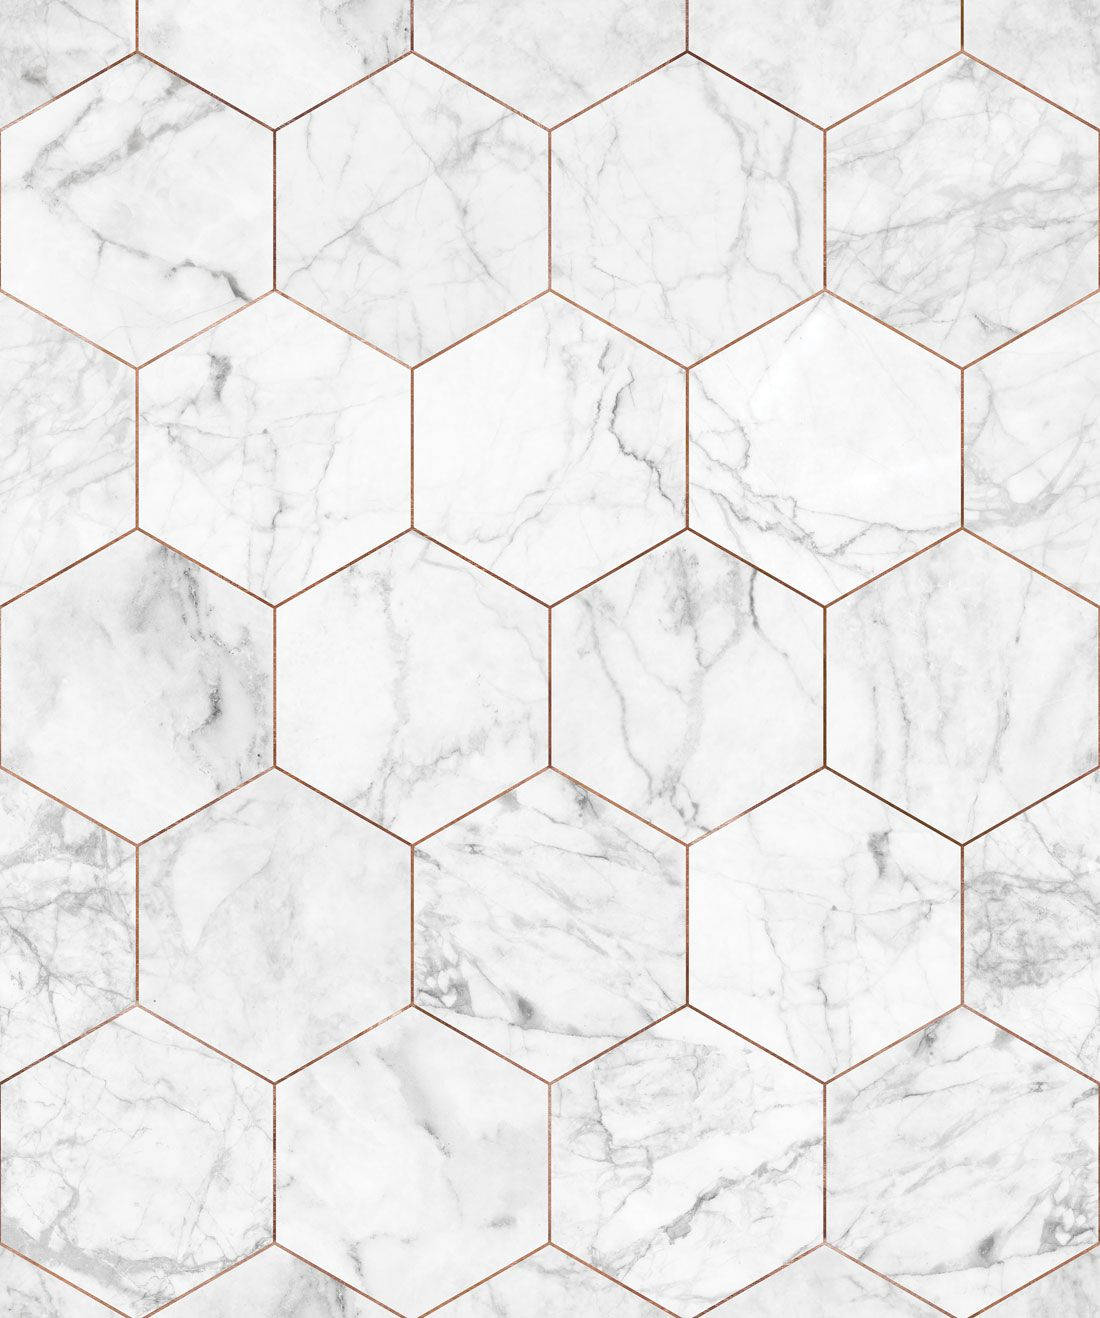 Hexagons On White Marble